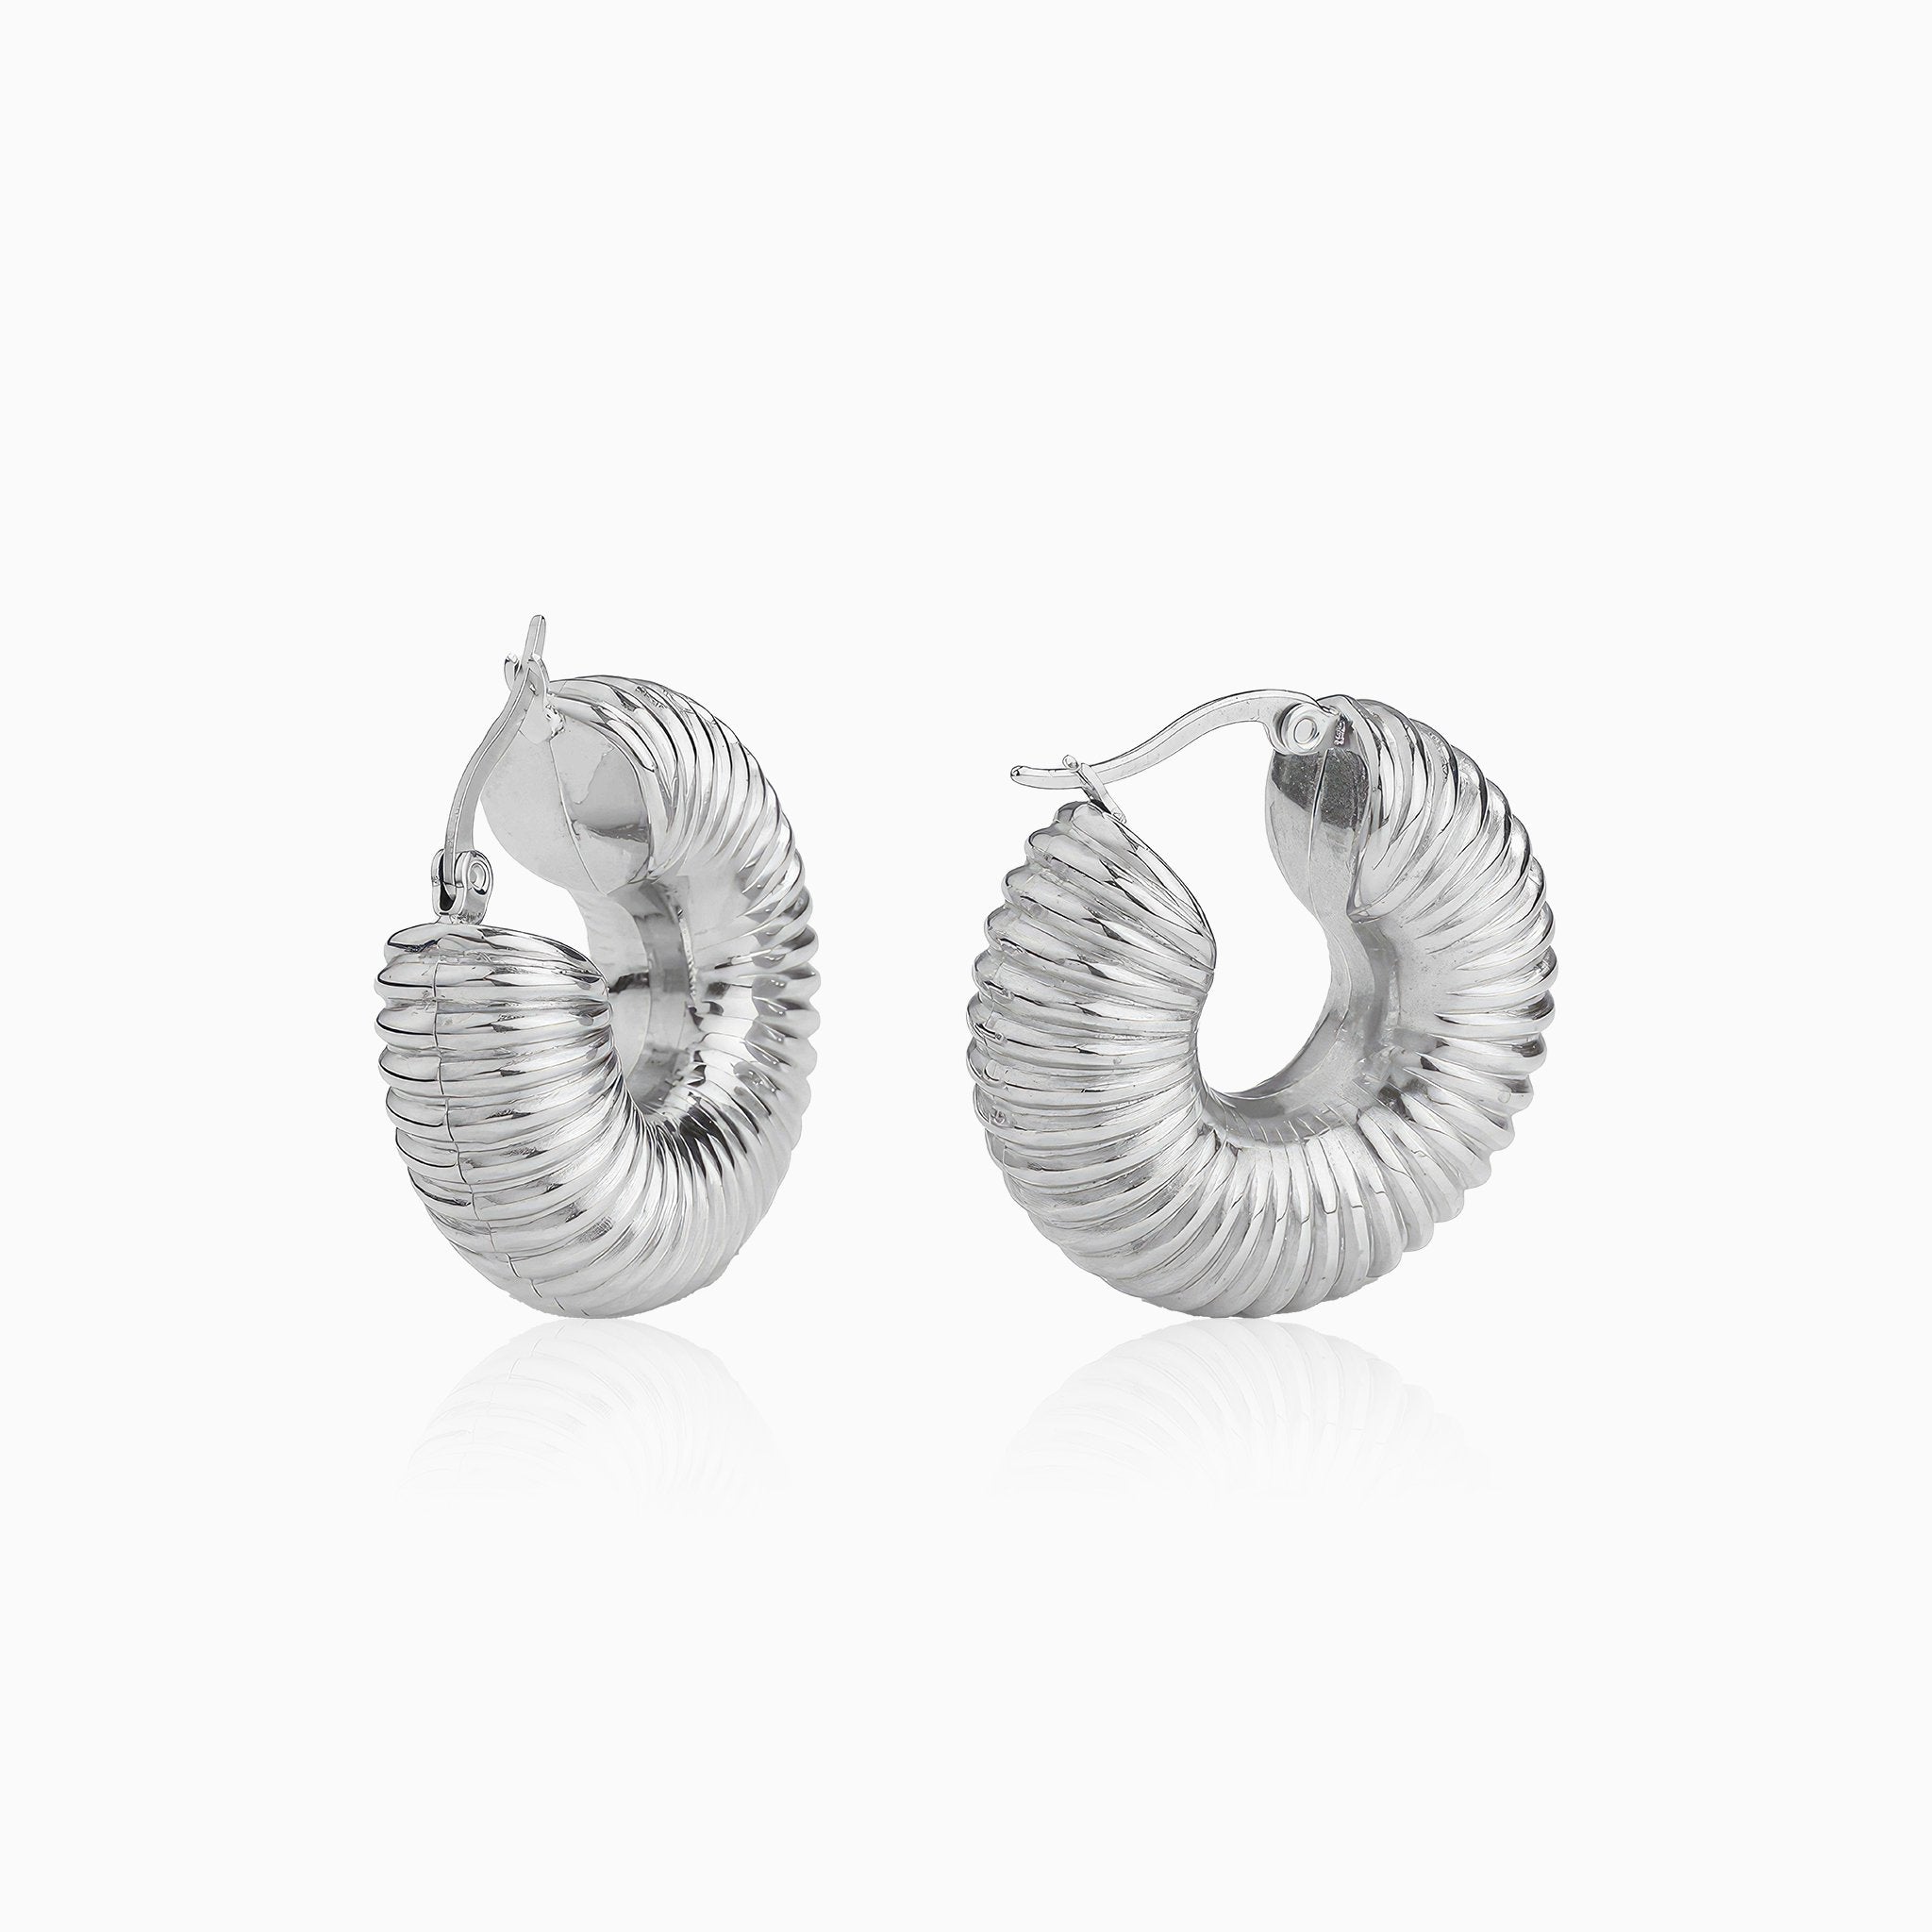 Textured Hoop Earrings - Nobbier - Earrings - 18K Gold And Titanium PVD Coated Jewelry